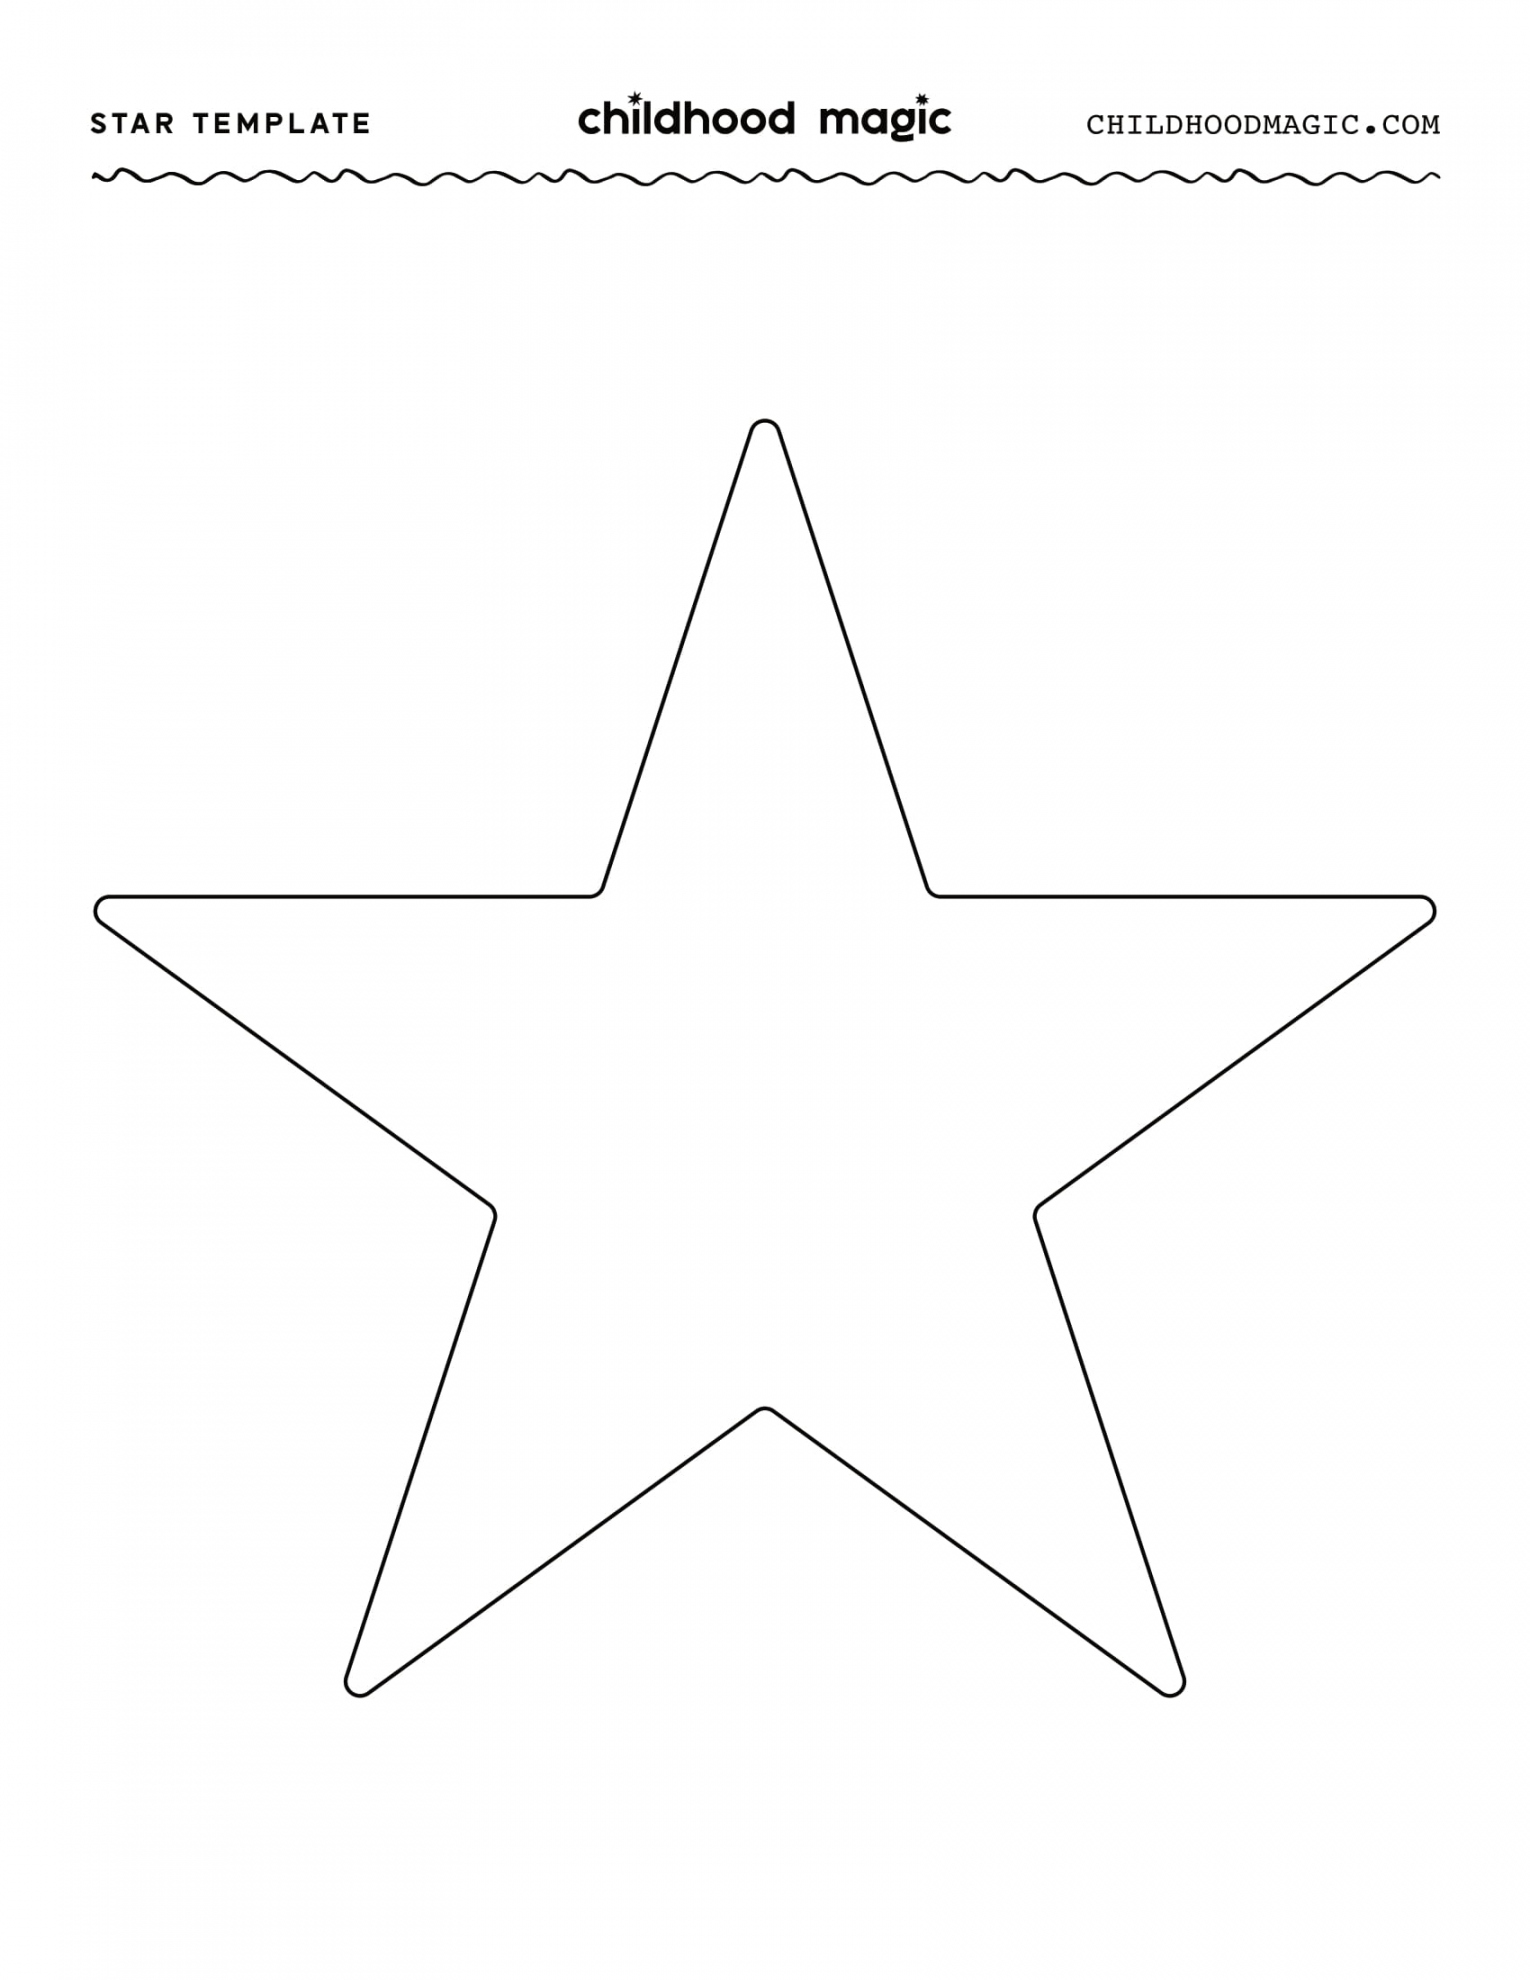 Star Shape Template - Free Printable - Childhood Magic - FREE Printables - Free Printable Star Template